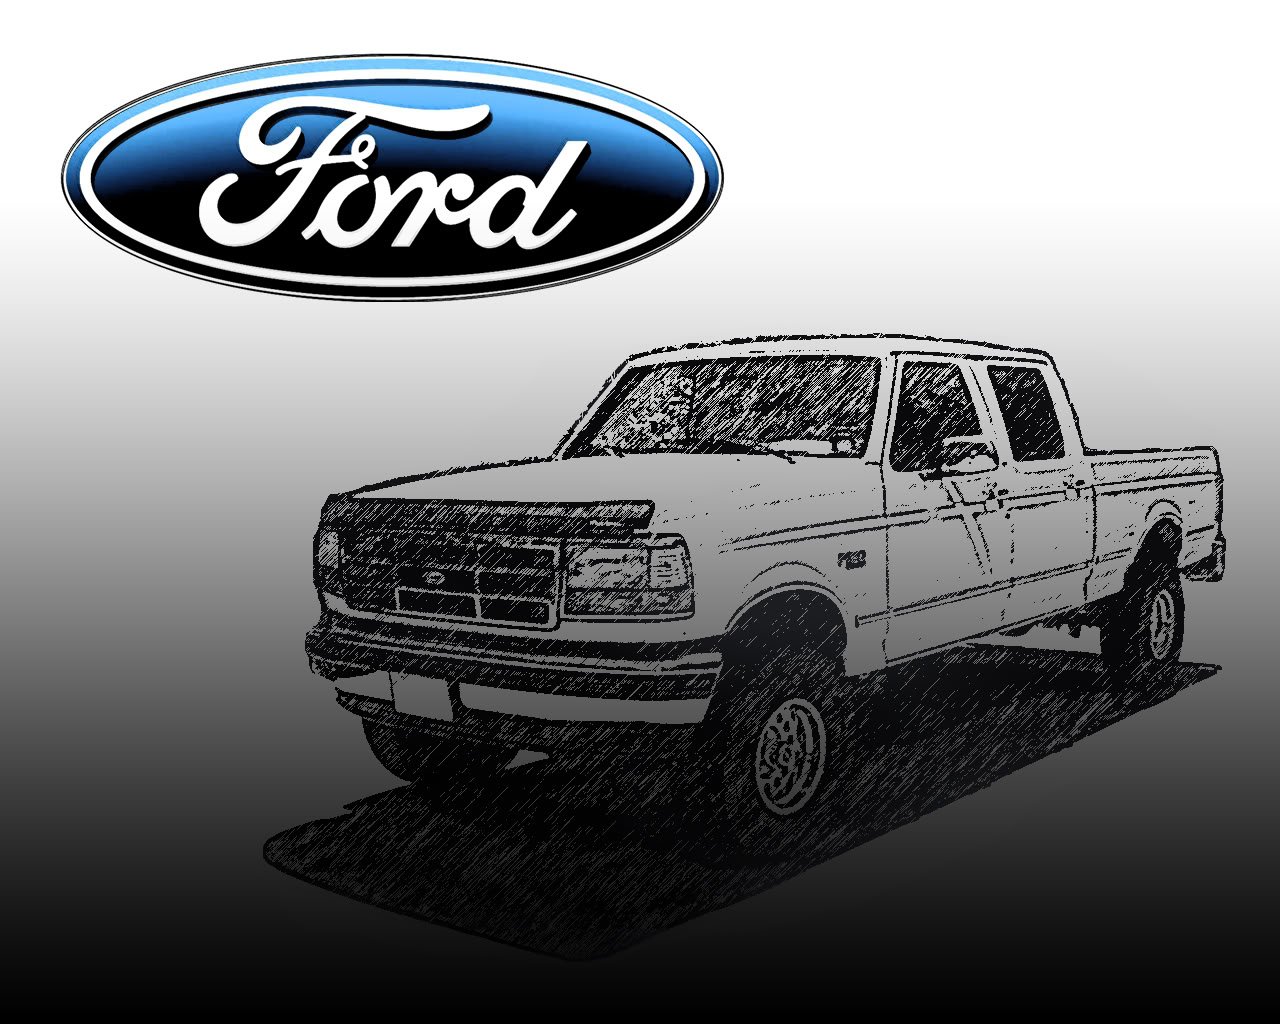 Ford Truck Wallpaper